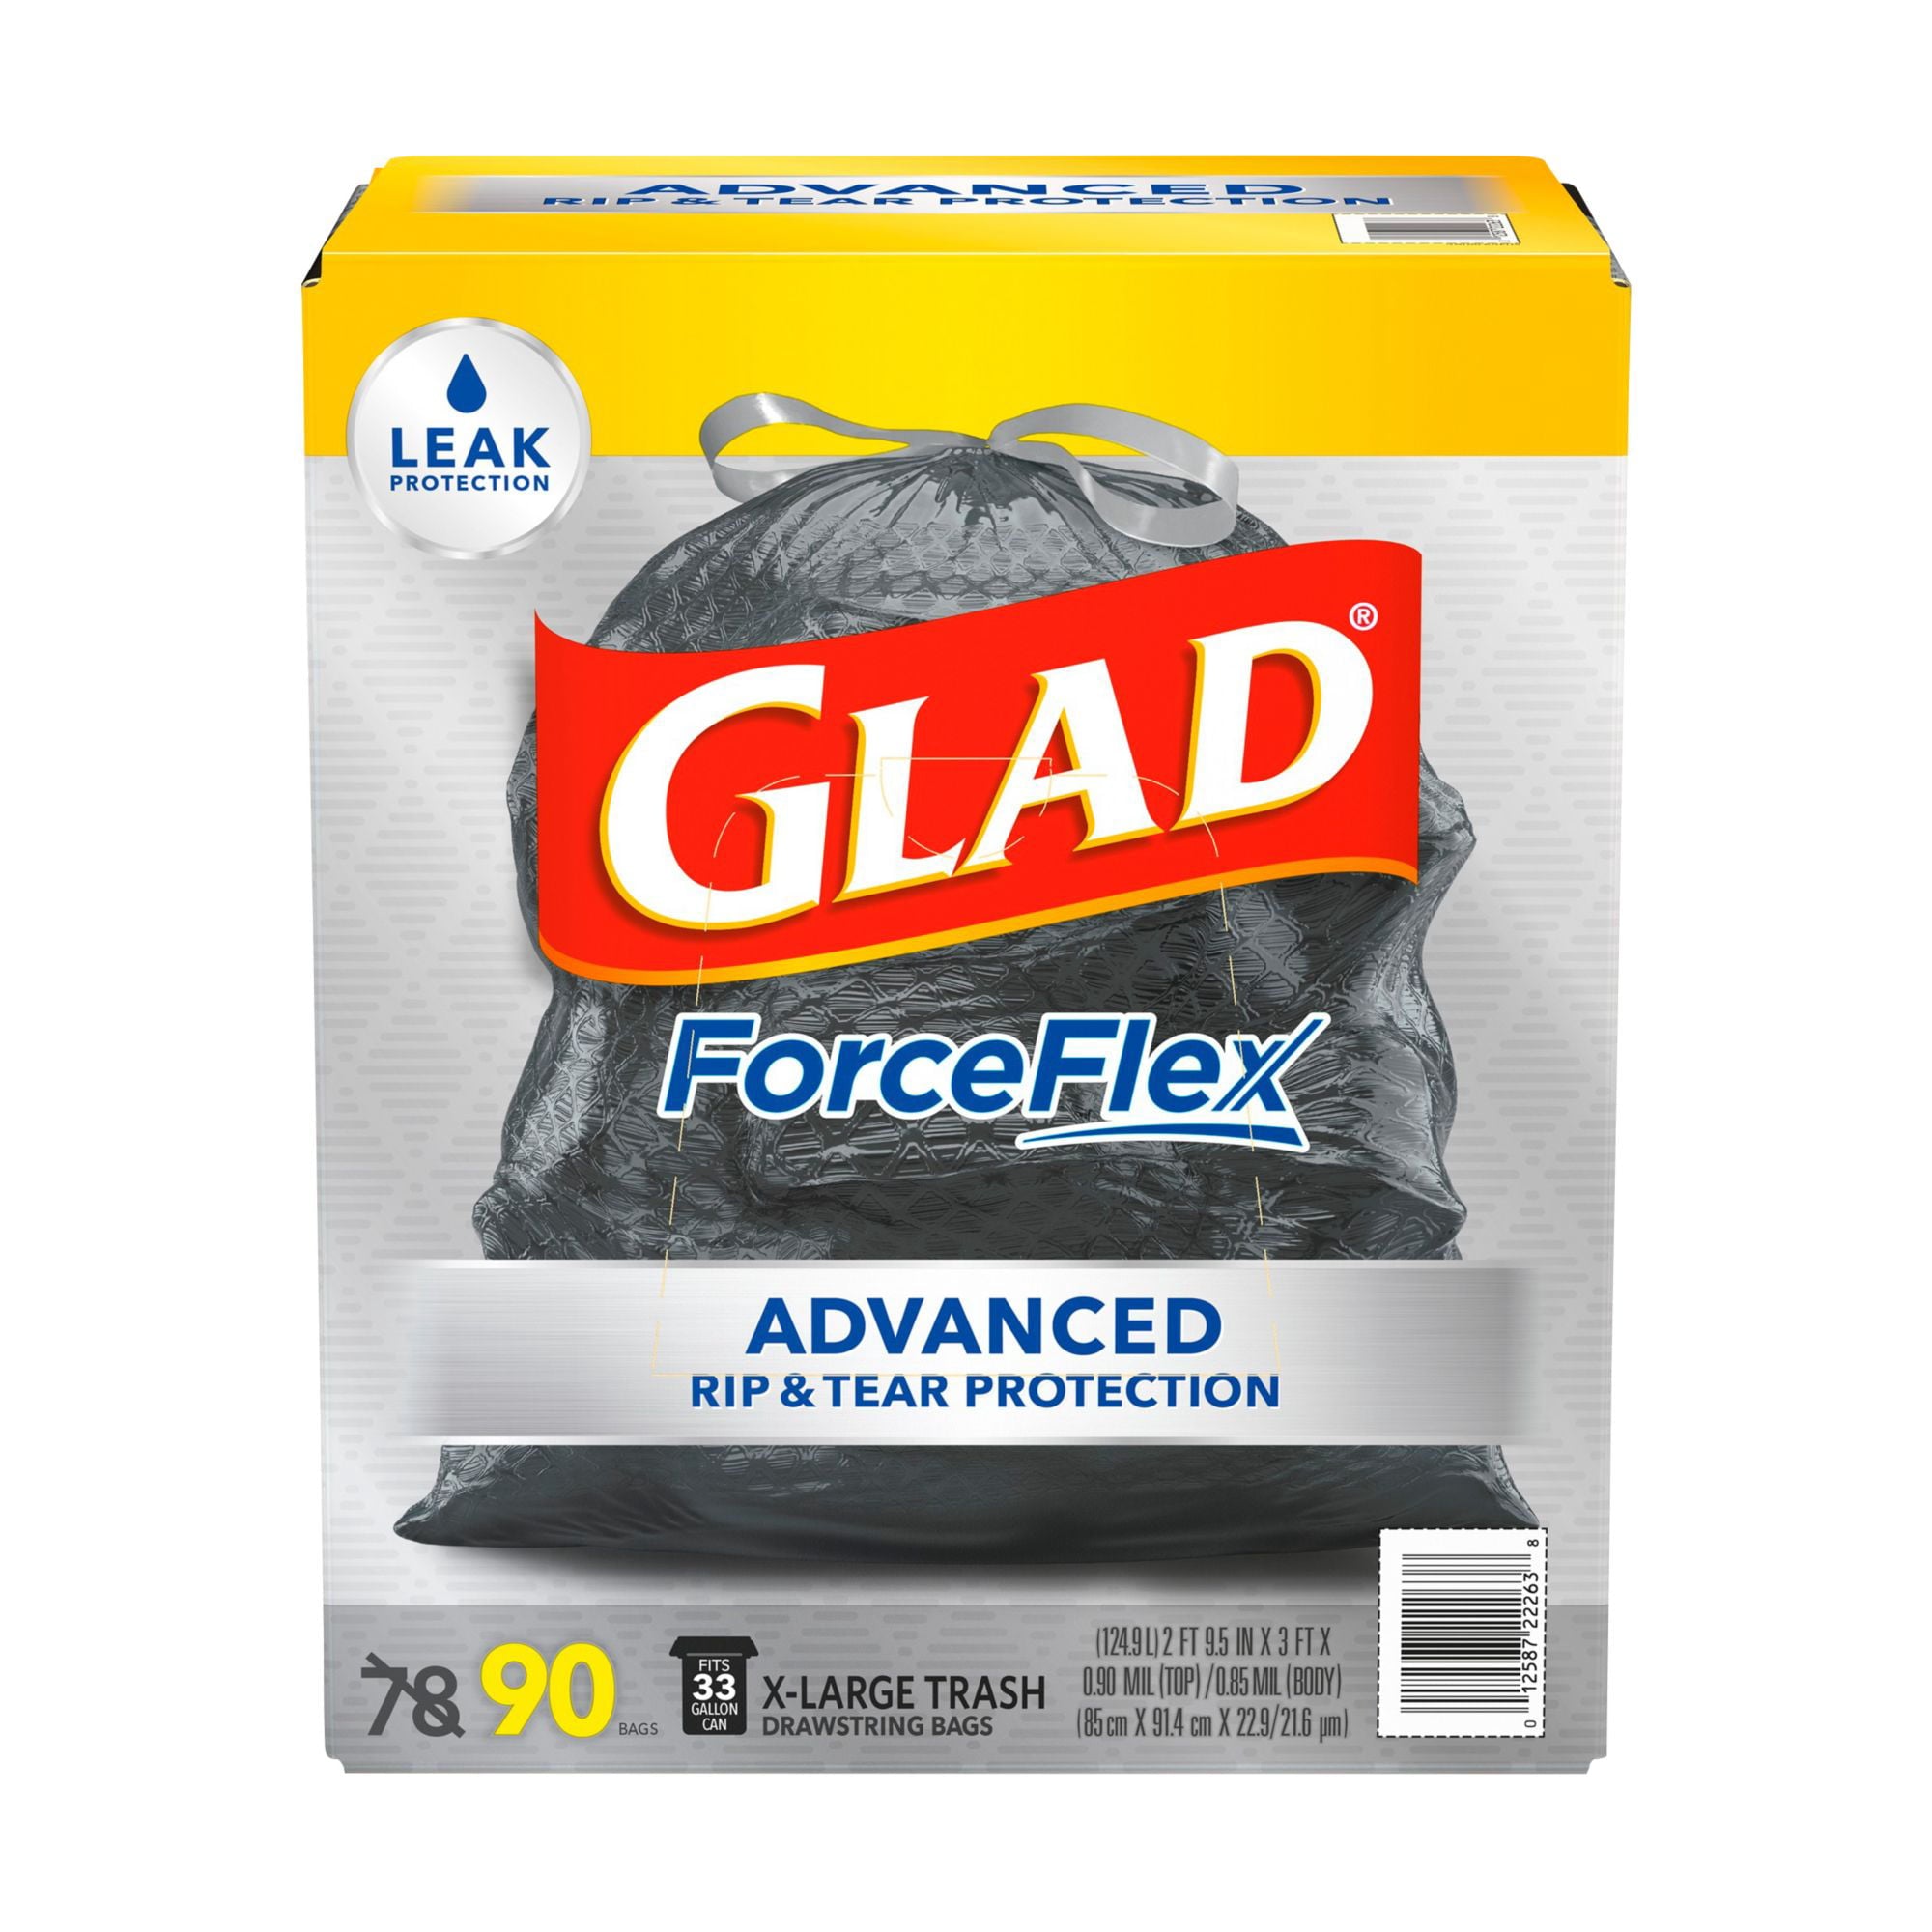 Glad Protection Series ForceFlex Plus Drawstring Lemon Fresh Bleach Odor  Shield with Clorox 13 Gallon 90ct